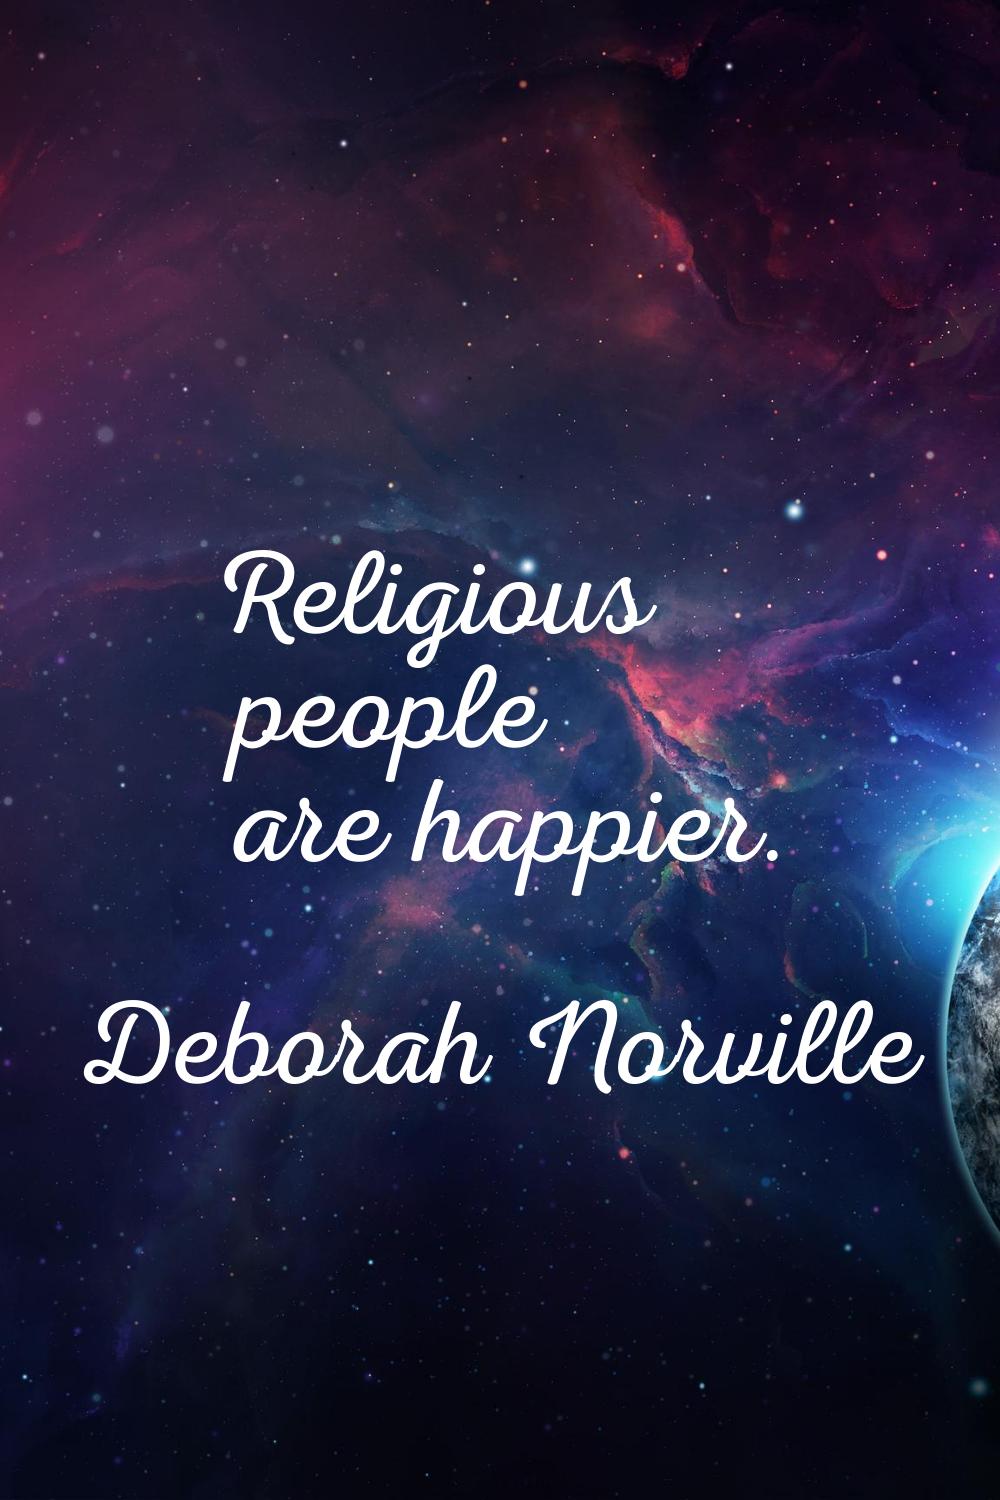 Religious people are happier.